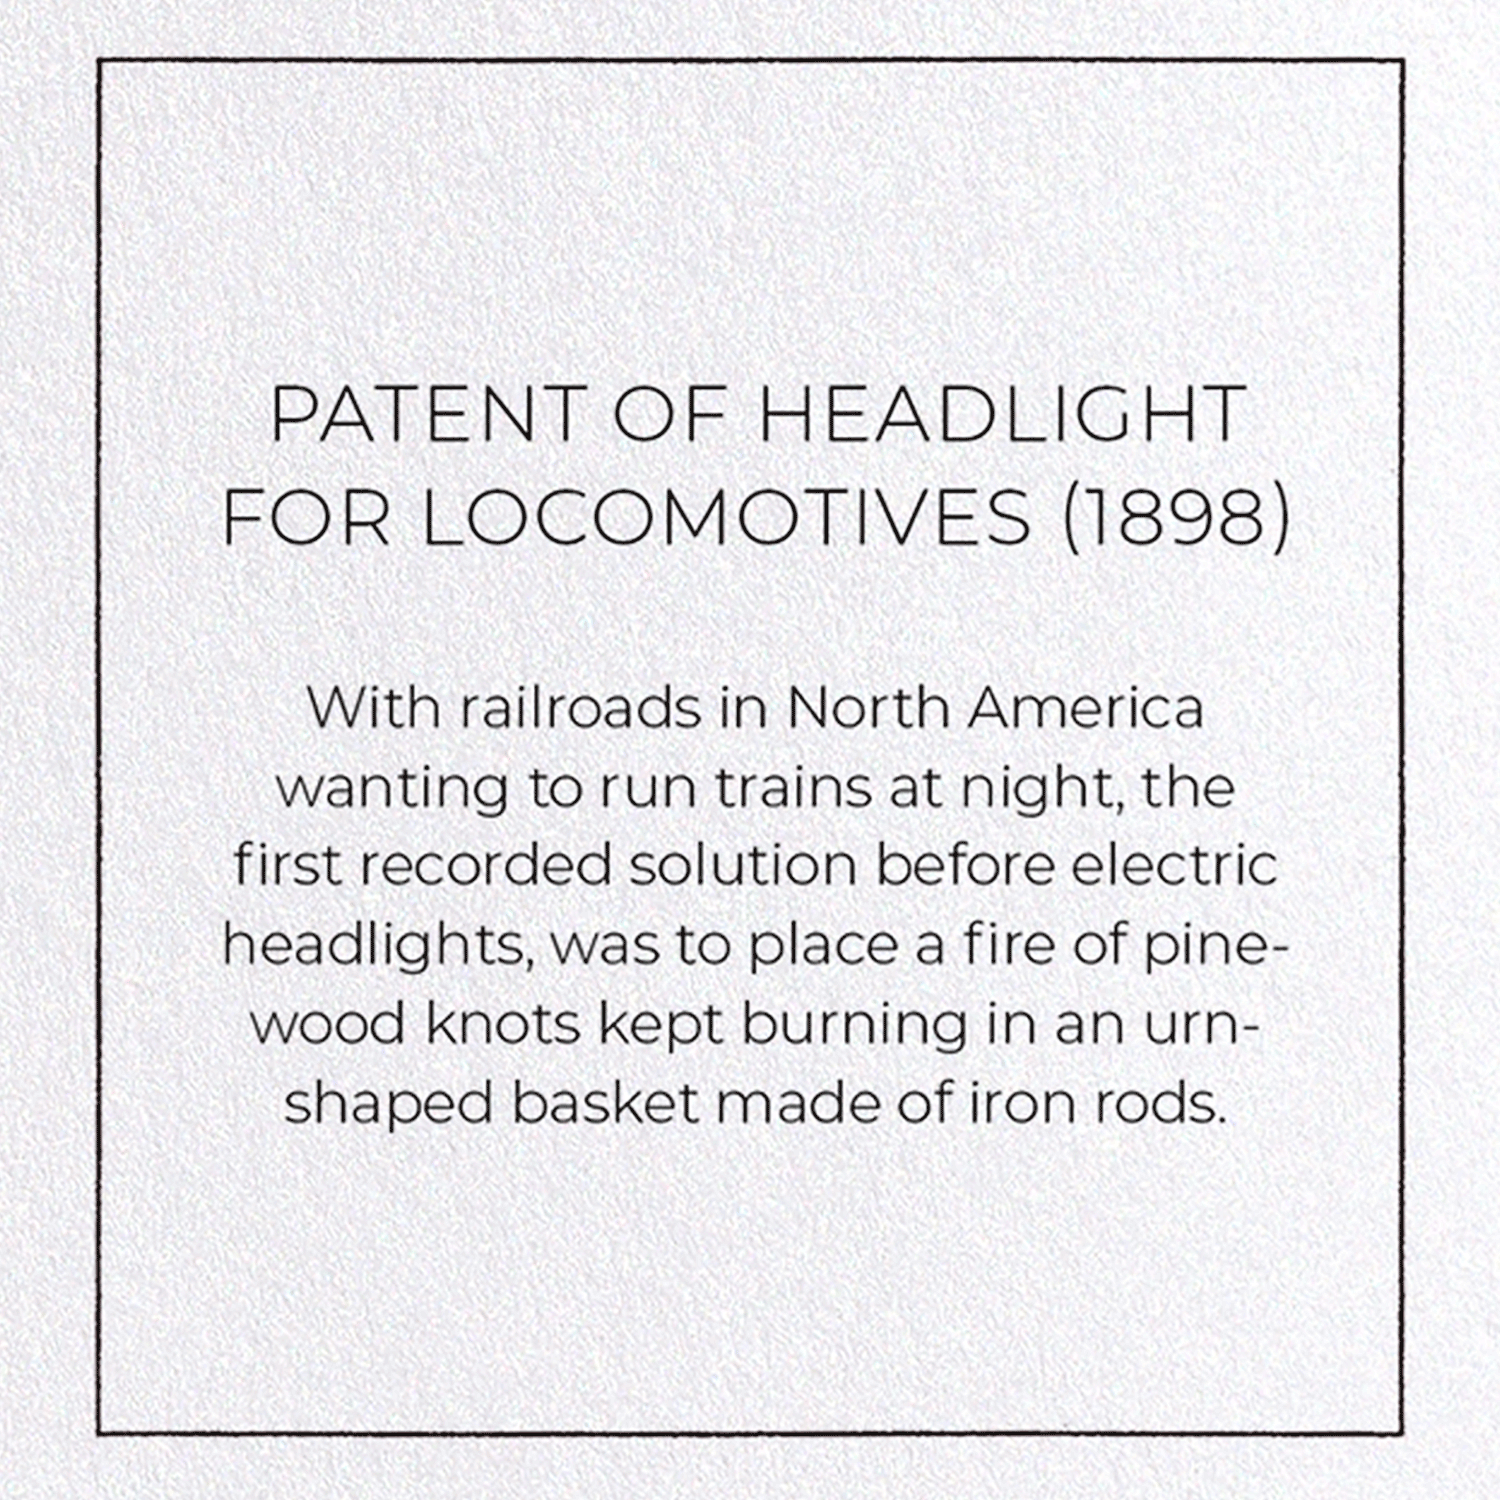 PATENT OF HEADLIGHT FOR LOCOMOTIVES (1898)